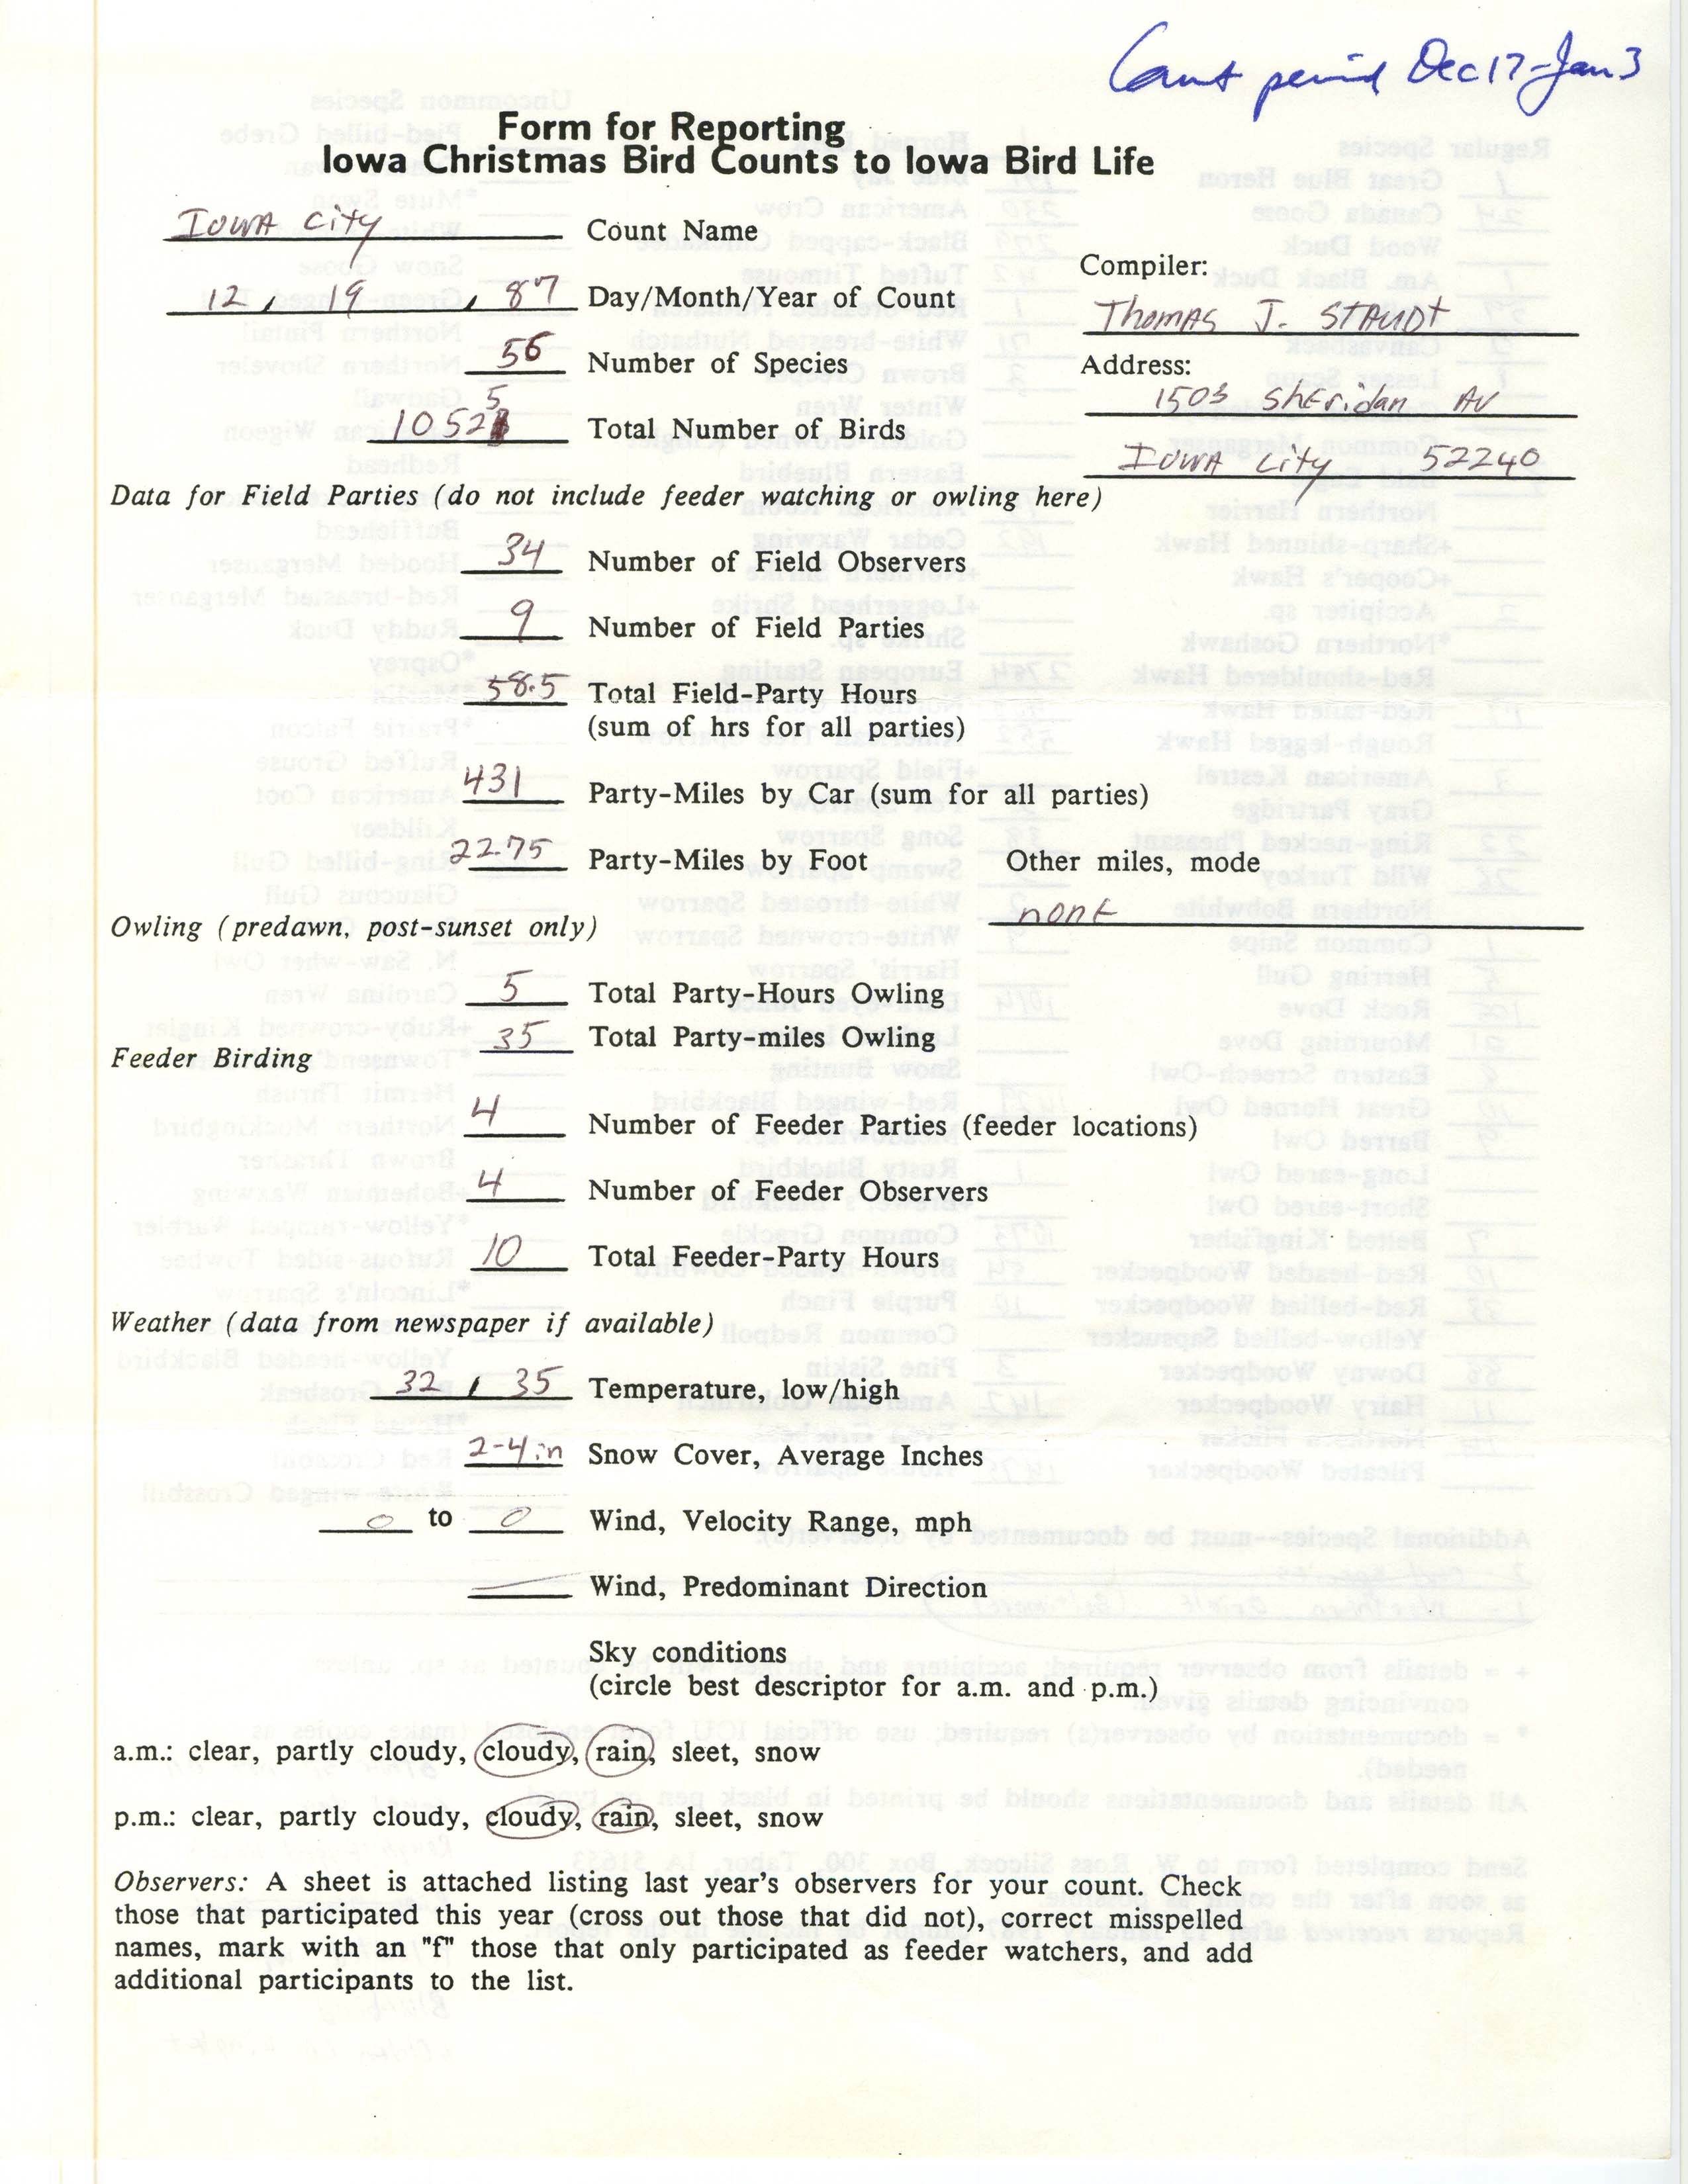 Form for reporting Iowa Christmas bird counts to Iowa Bird Life, Thomas J. Staudt, December 19, 1987